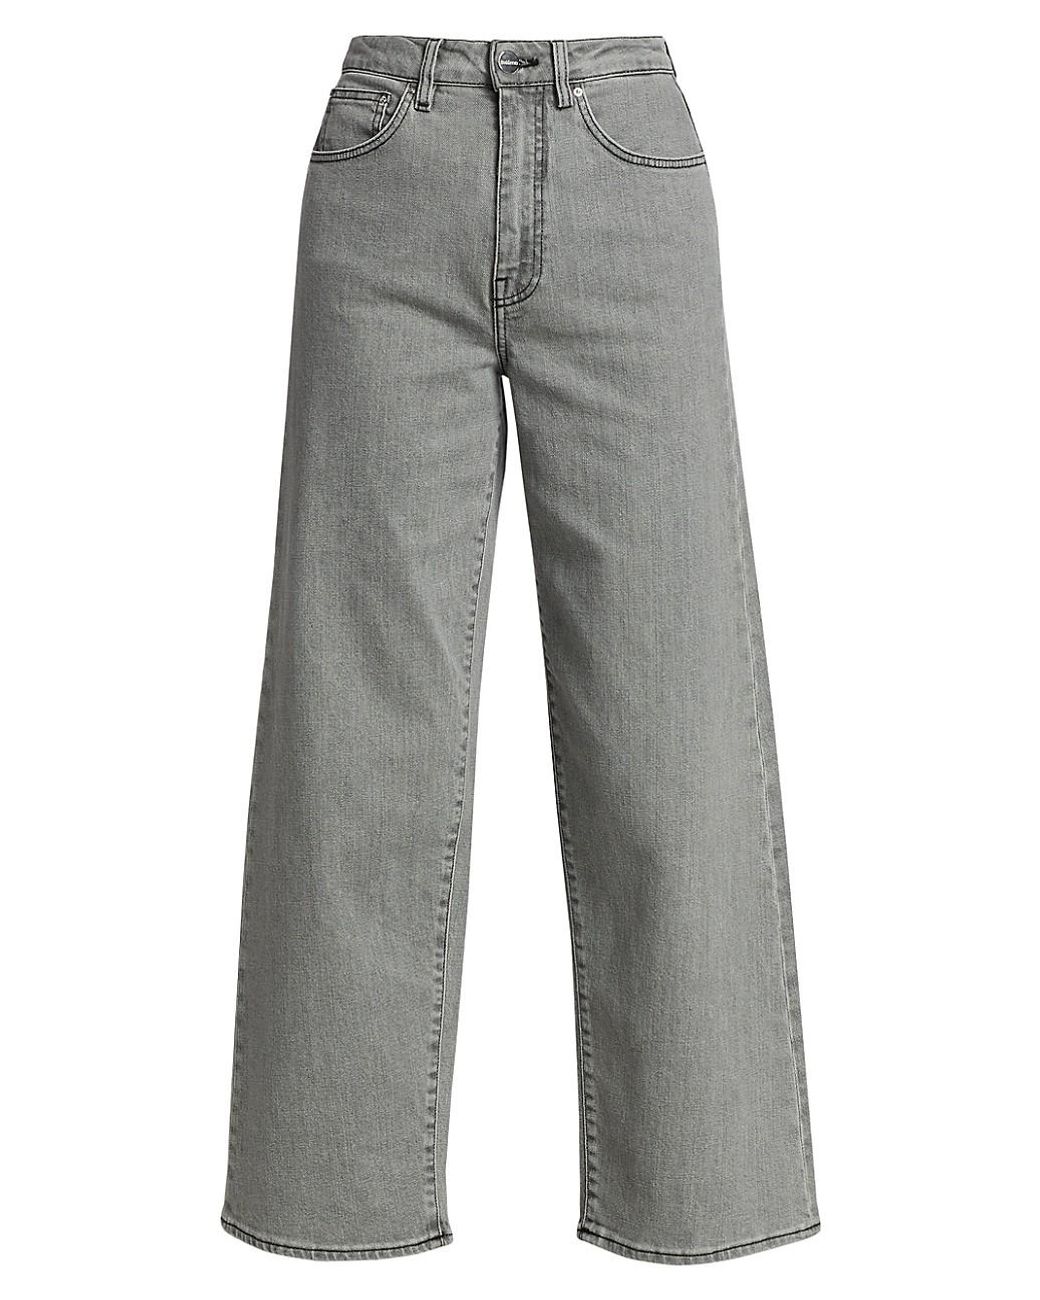 Totême Denim Flair High-rise Wide-leg Jeans in Light Grey (Gray) - Lyst